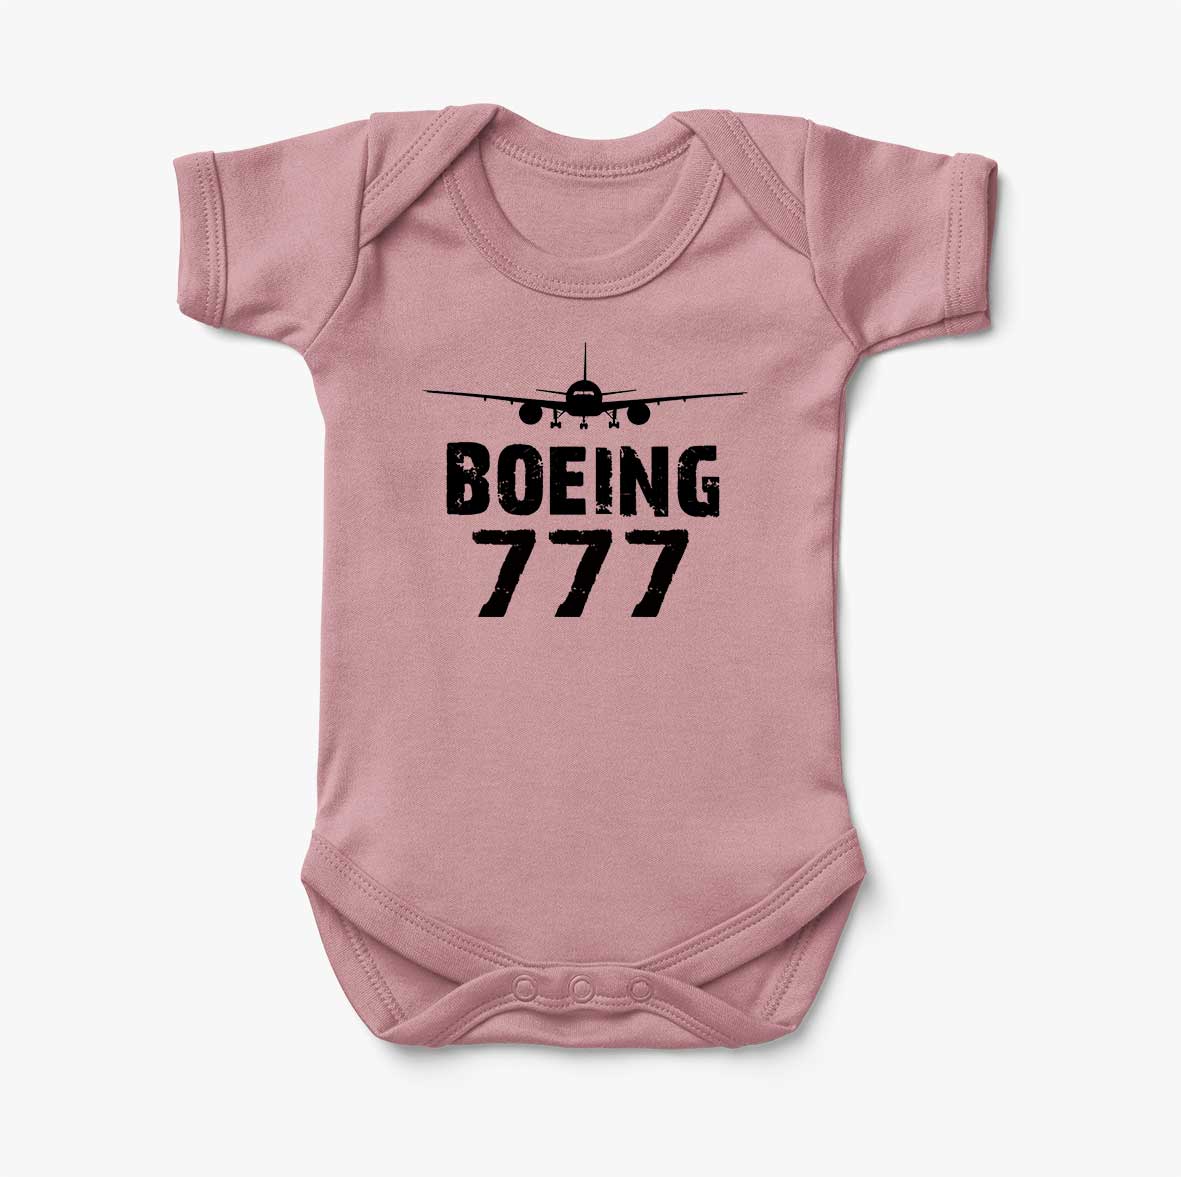 Boeing 777 & Plane Designed Baby Bodysuits